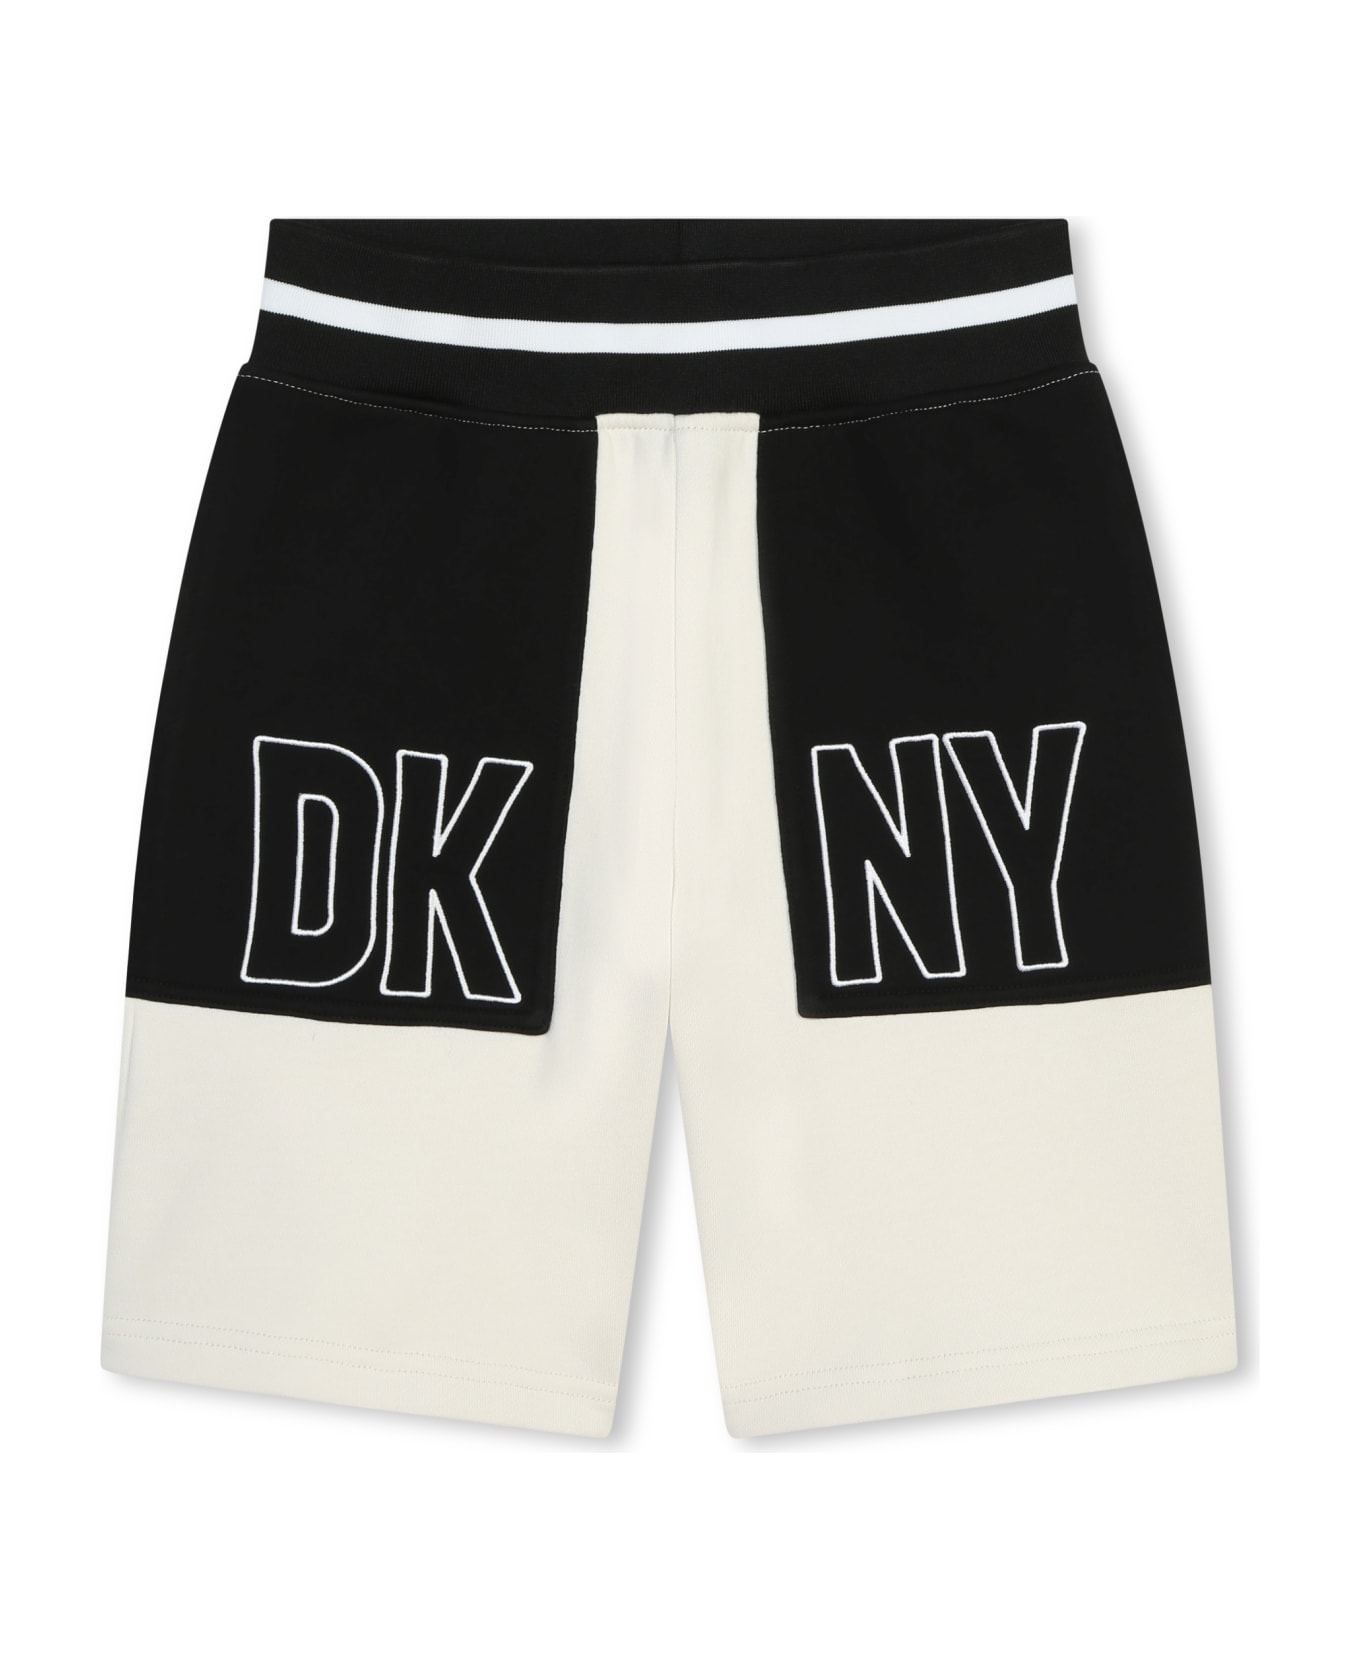 DKNY T-shirt With Print - Bianco ジャンプスーツ